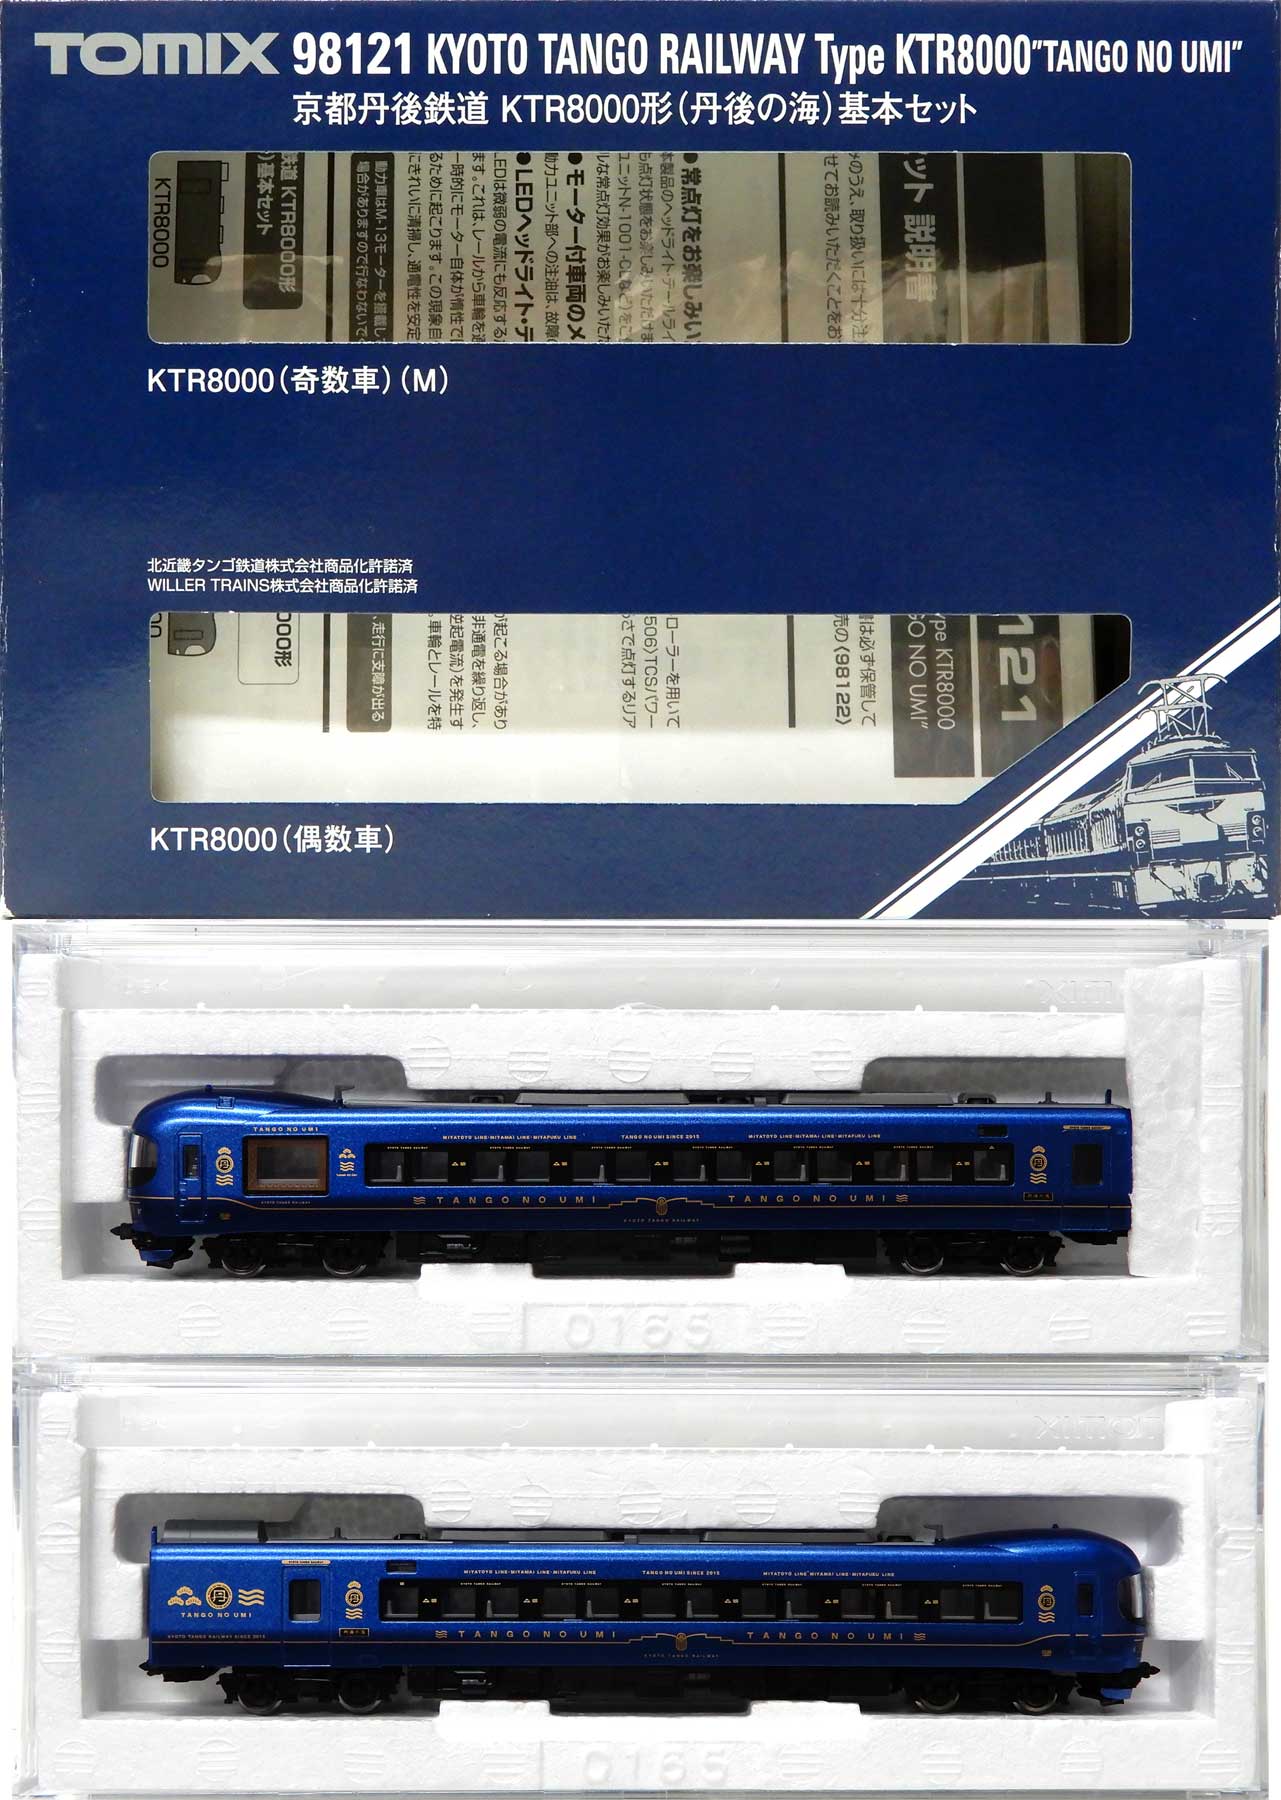 TOMIX《京都丹後鉄道 KTR8000 丹後の海》M＋T 4両編成 - 鉄道模型